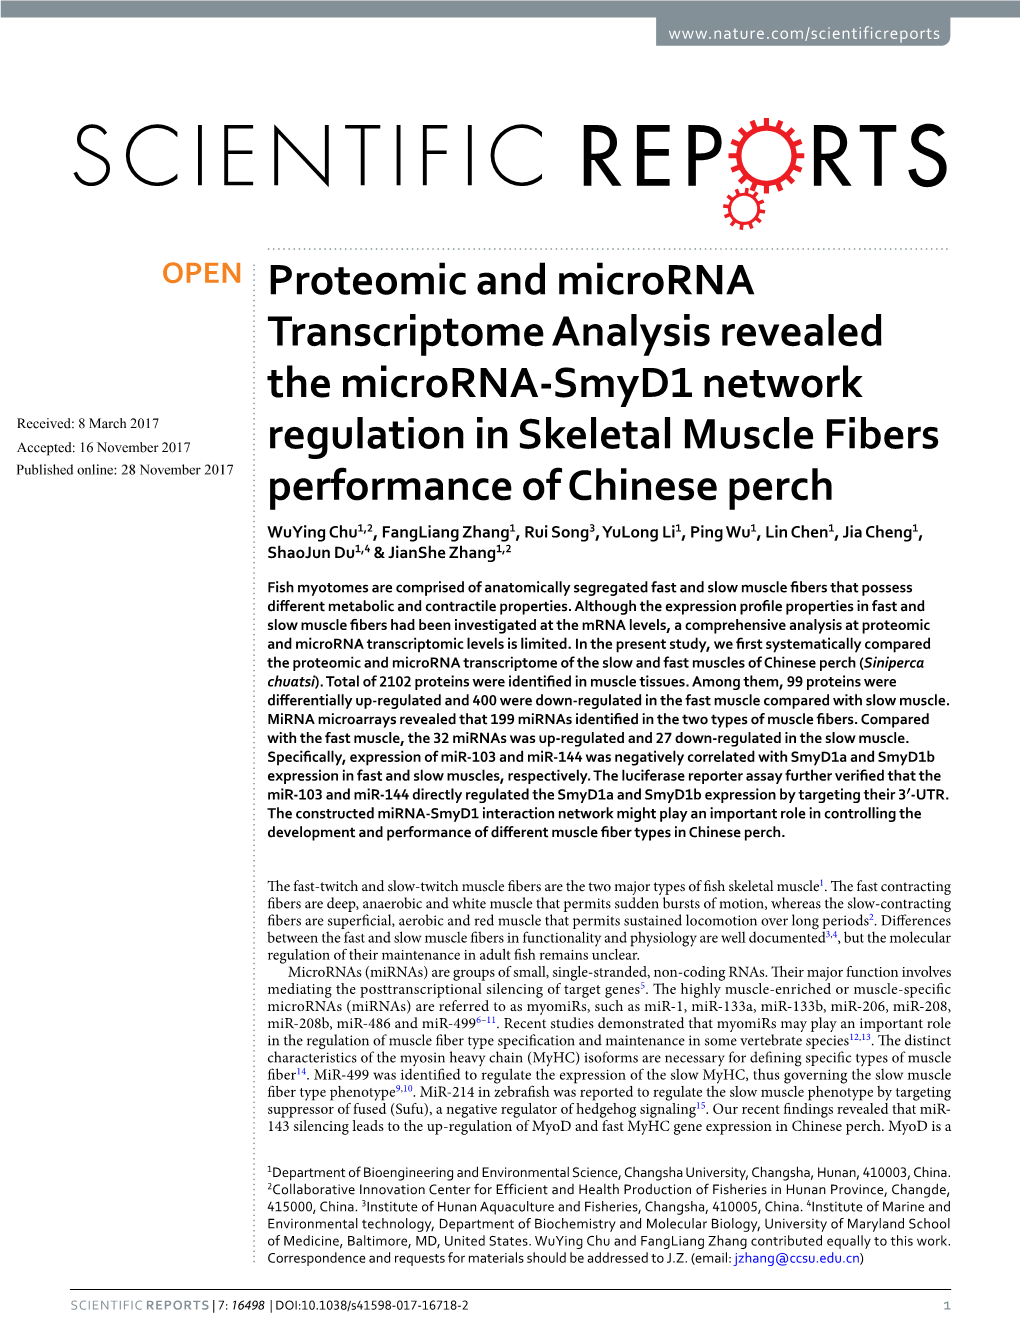 Proteomic and Microrna Transcriptome Analysis Revealed